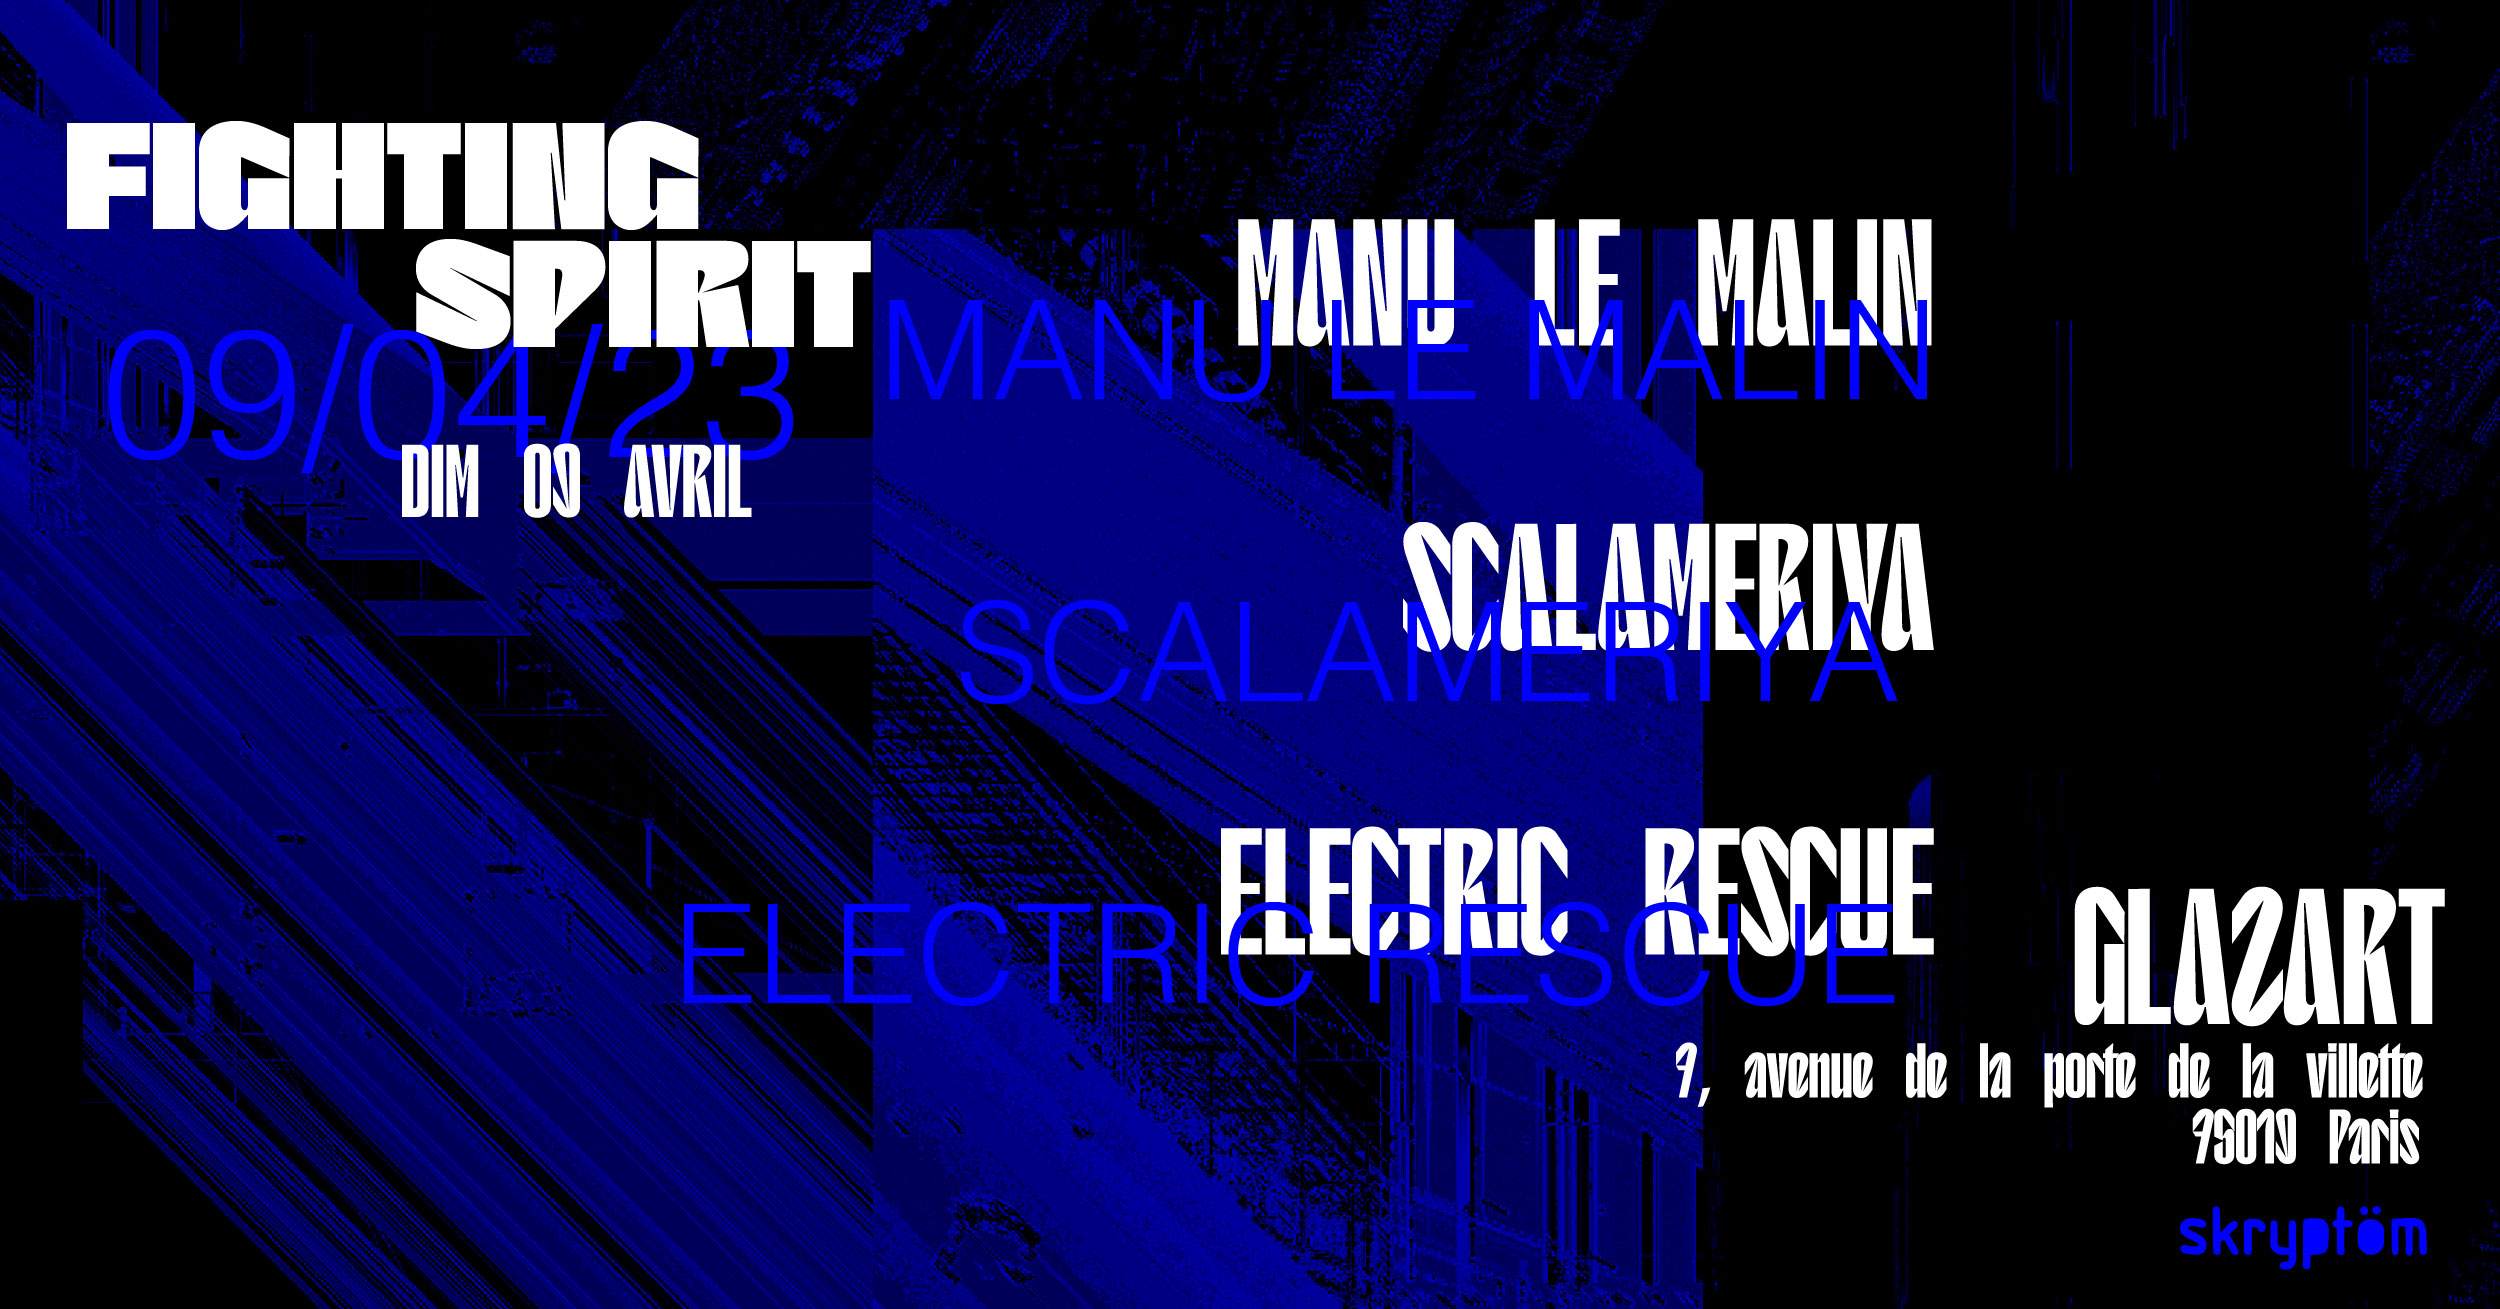 Fighting Spirit #2 - Scalameriya - Manu Le Malin - Electric Rescue - フライヤー表